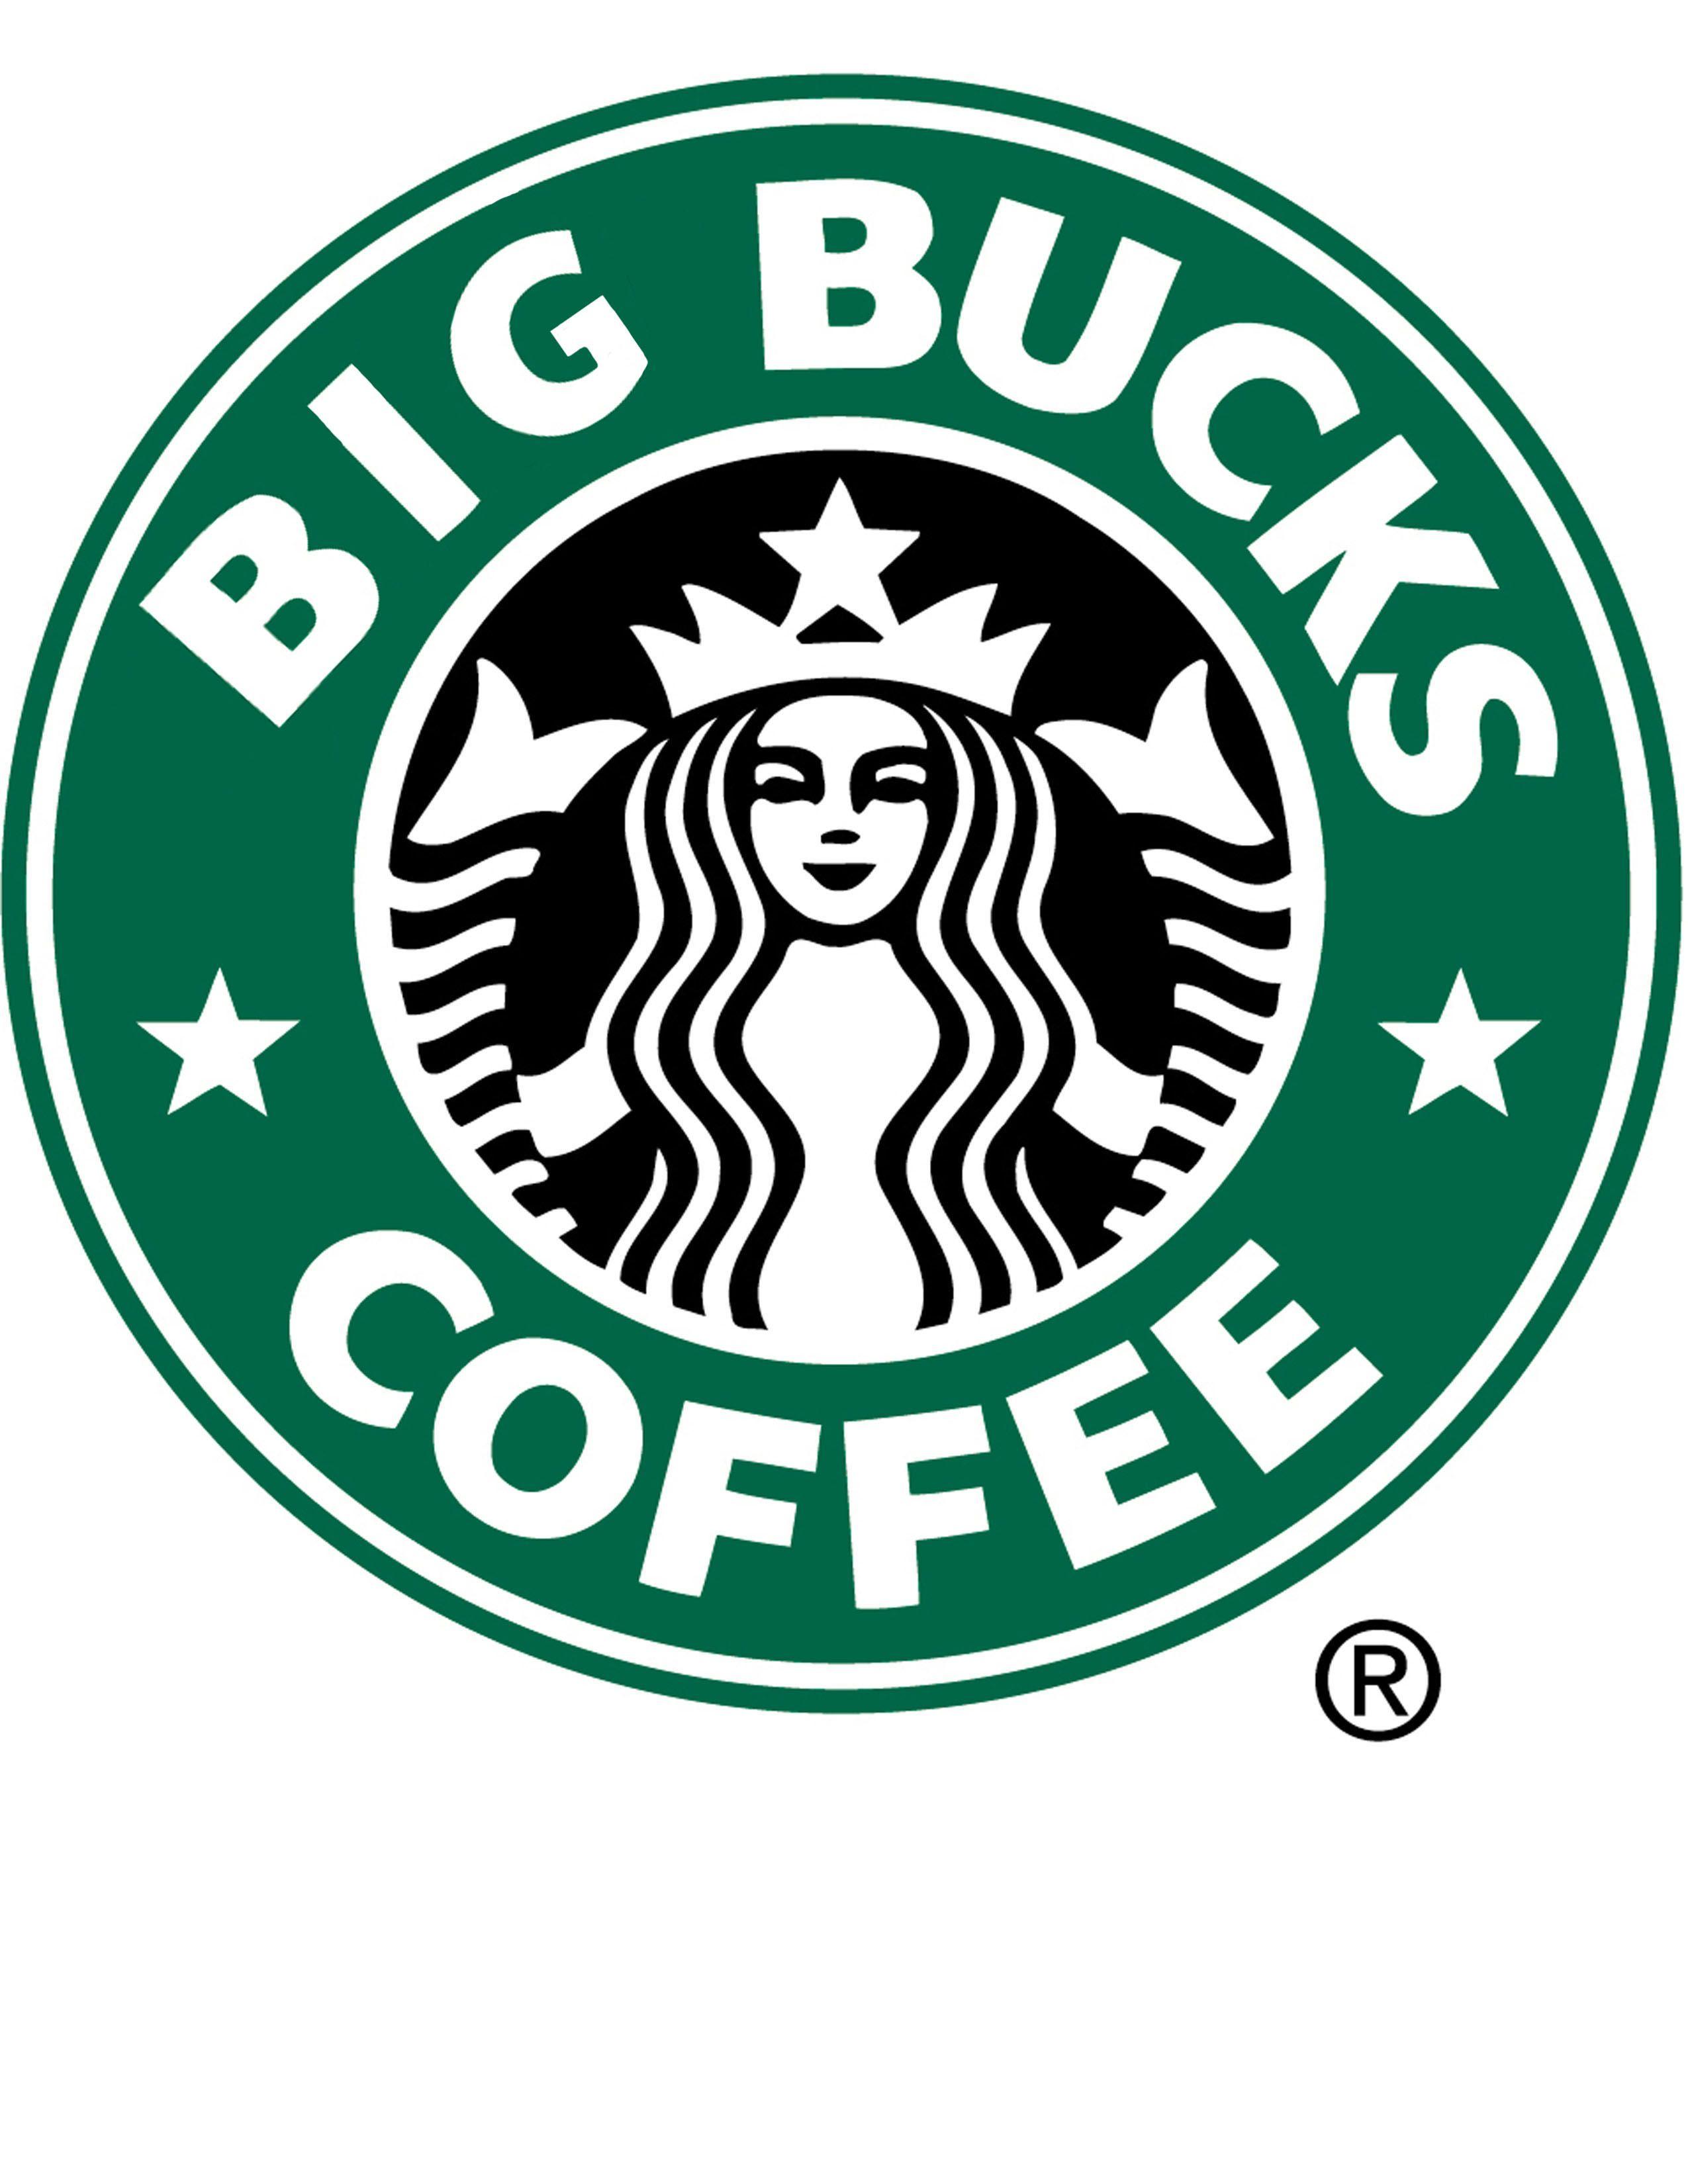 Starbucks Coffee Cup Logo - Starbucks-Coffee-Company logo